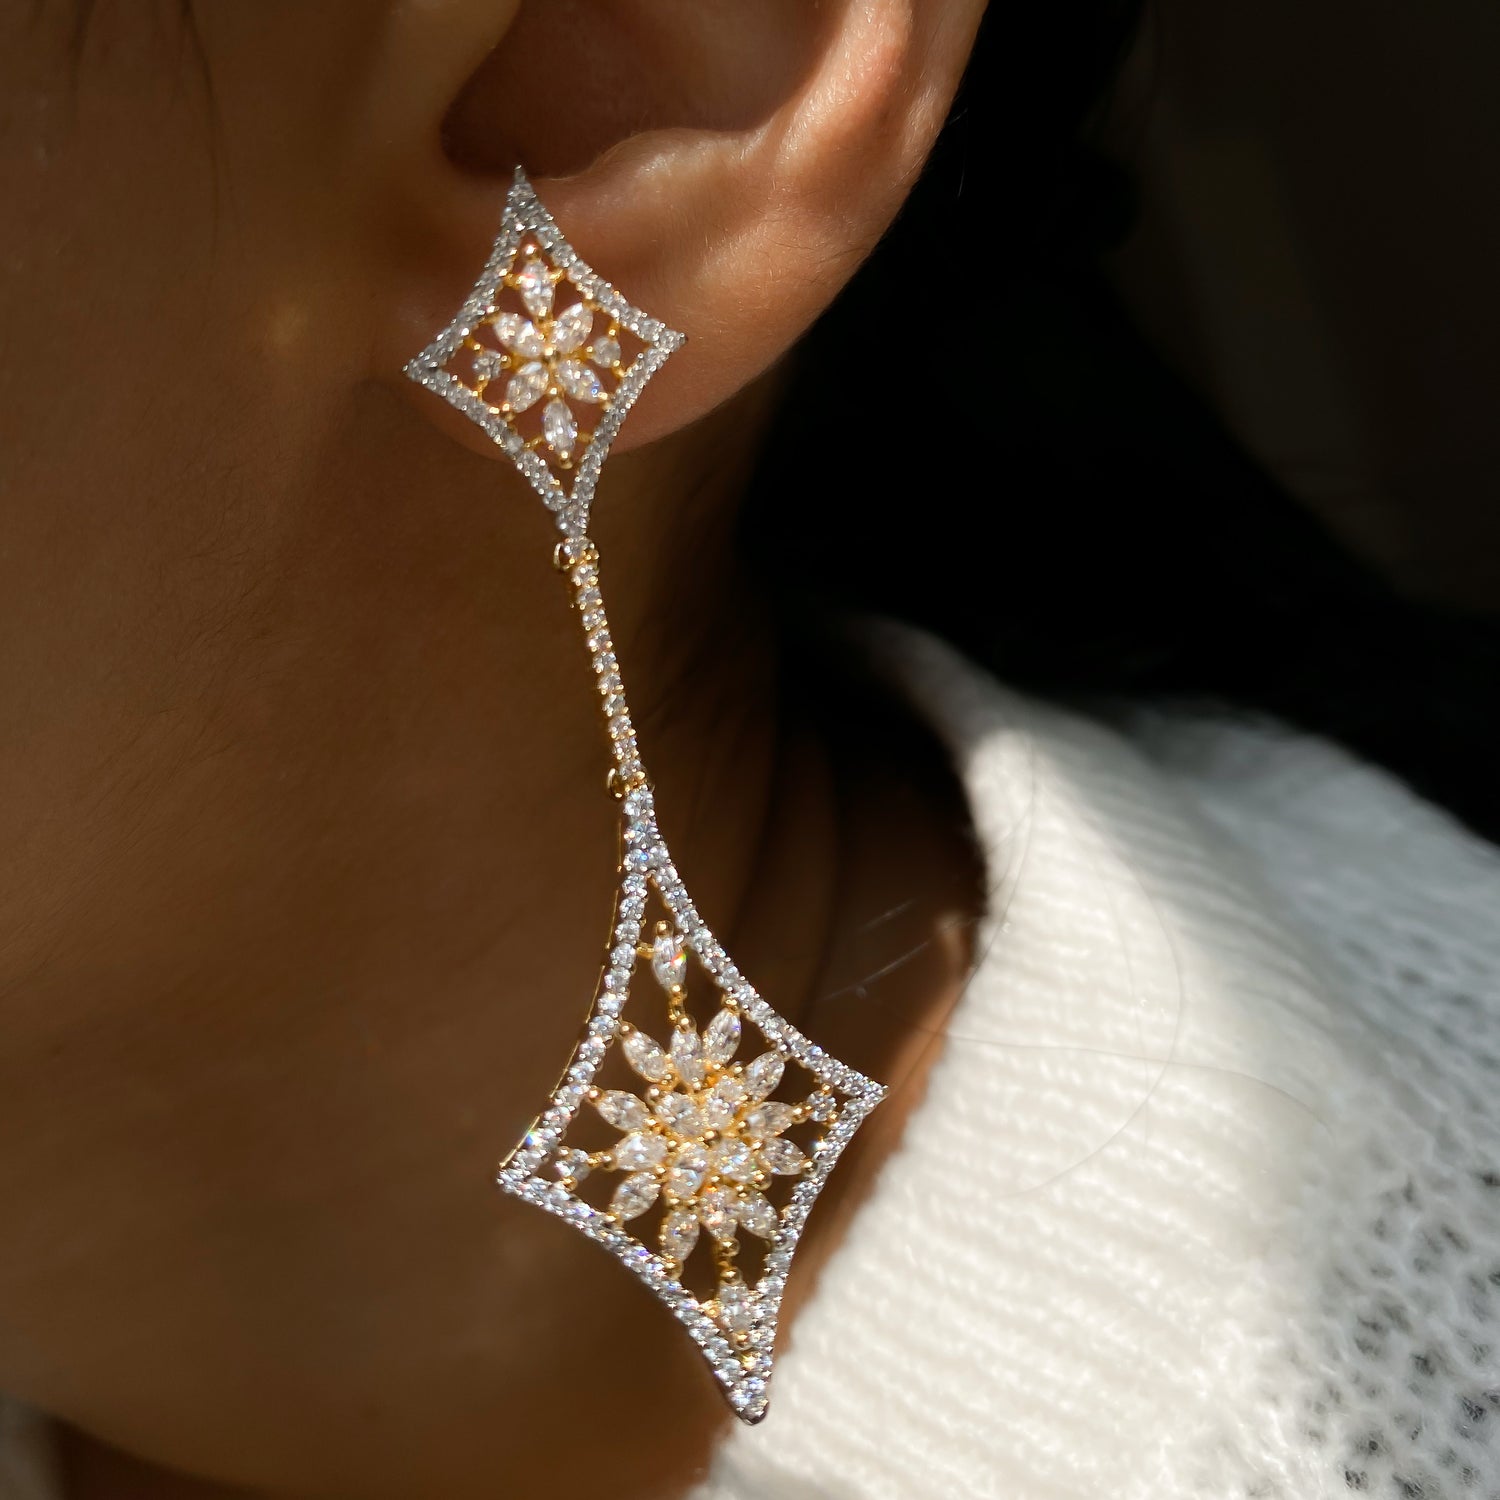 Madalion diamond earrings - RosyWine 